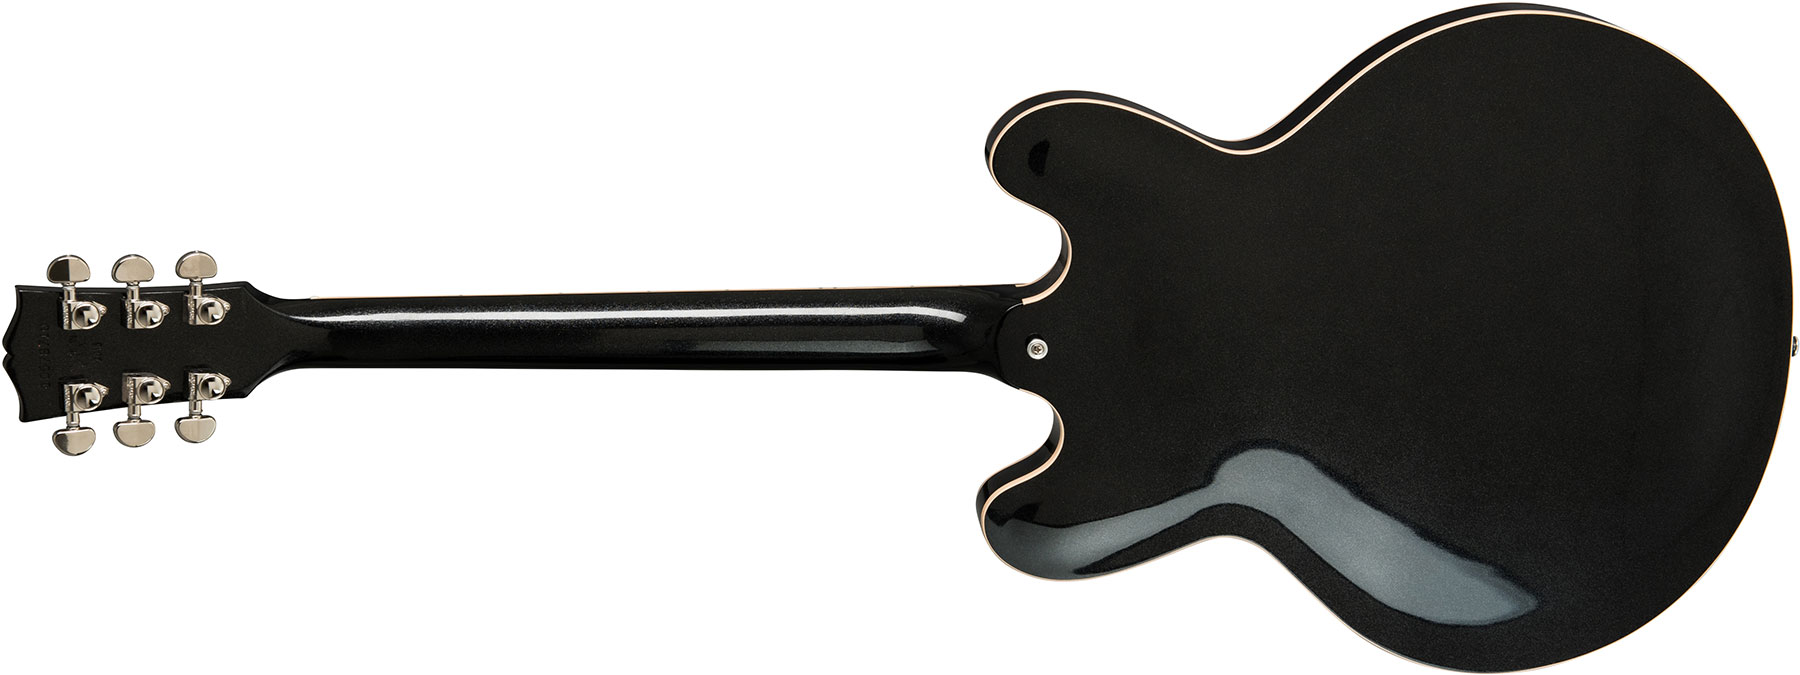 Gibson Es-335 Dot 2019 Hh Ht Rw - Graphite Metallic - Semi hollow elektriche gitaar - Variation 2